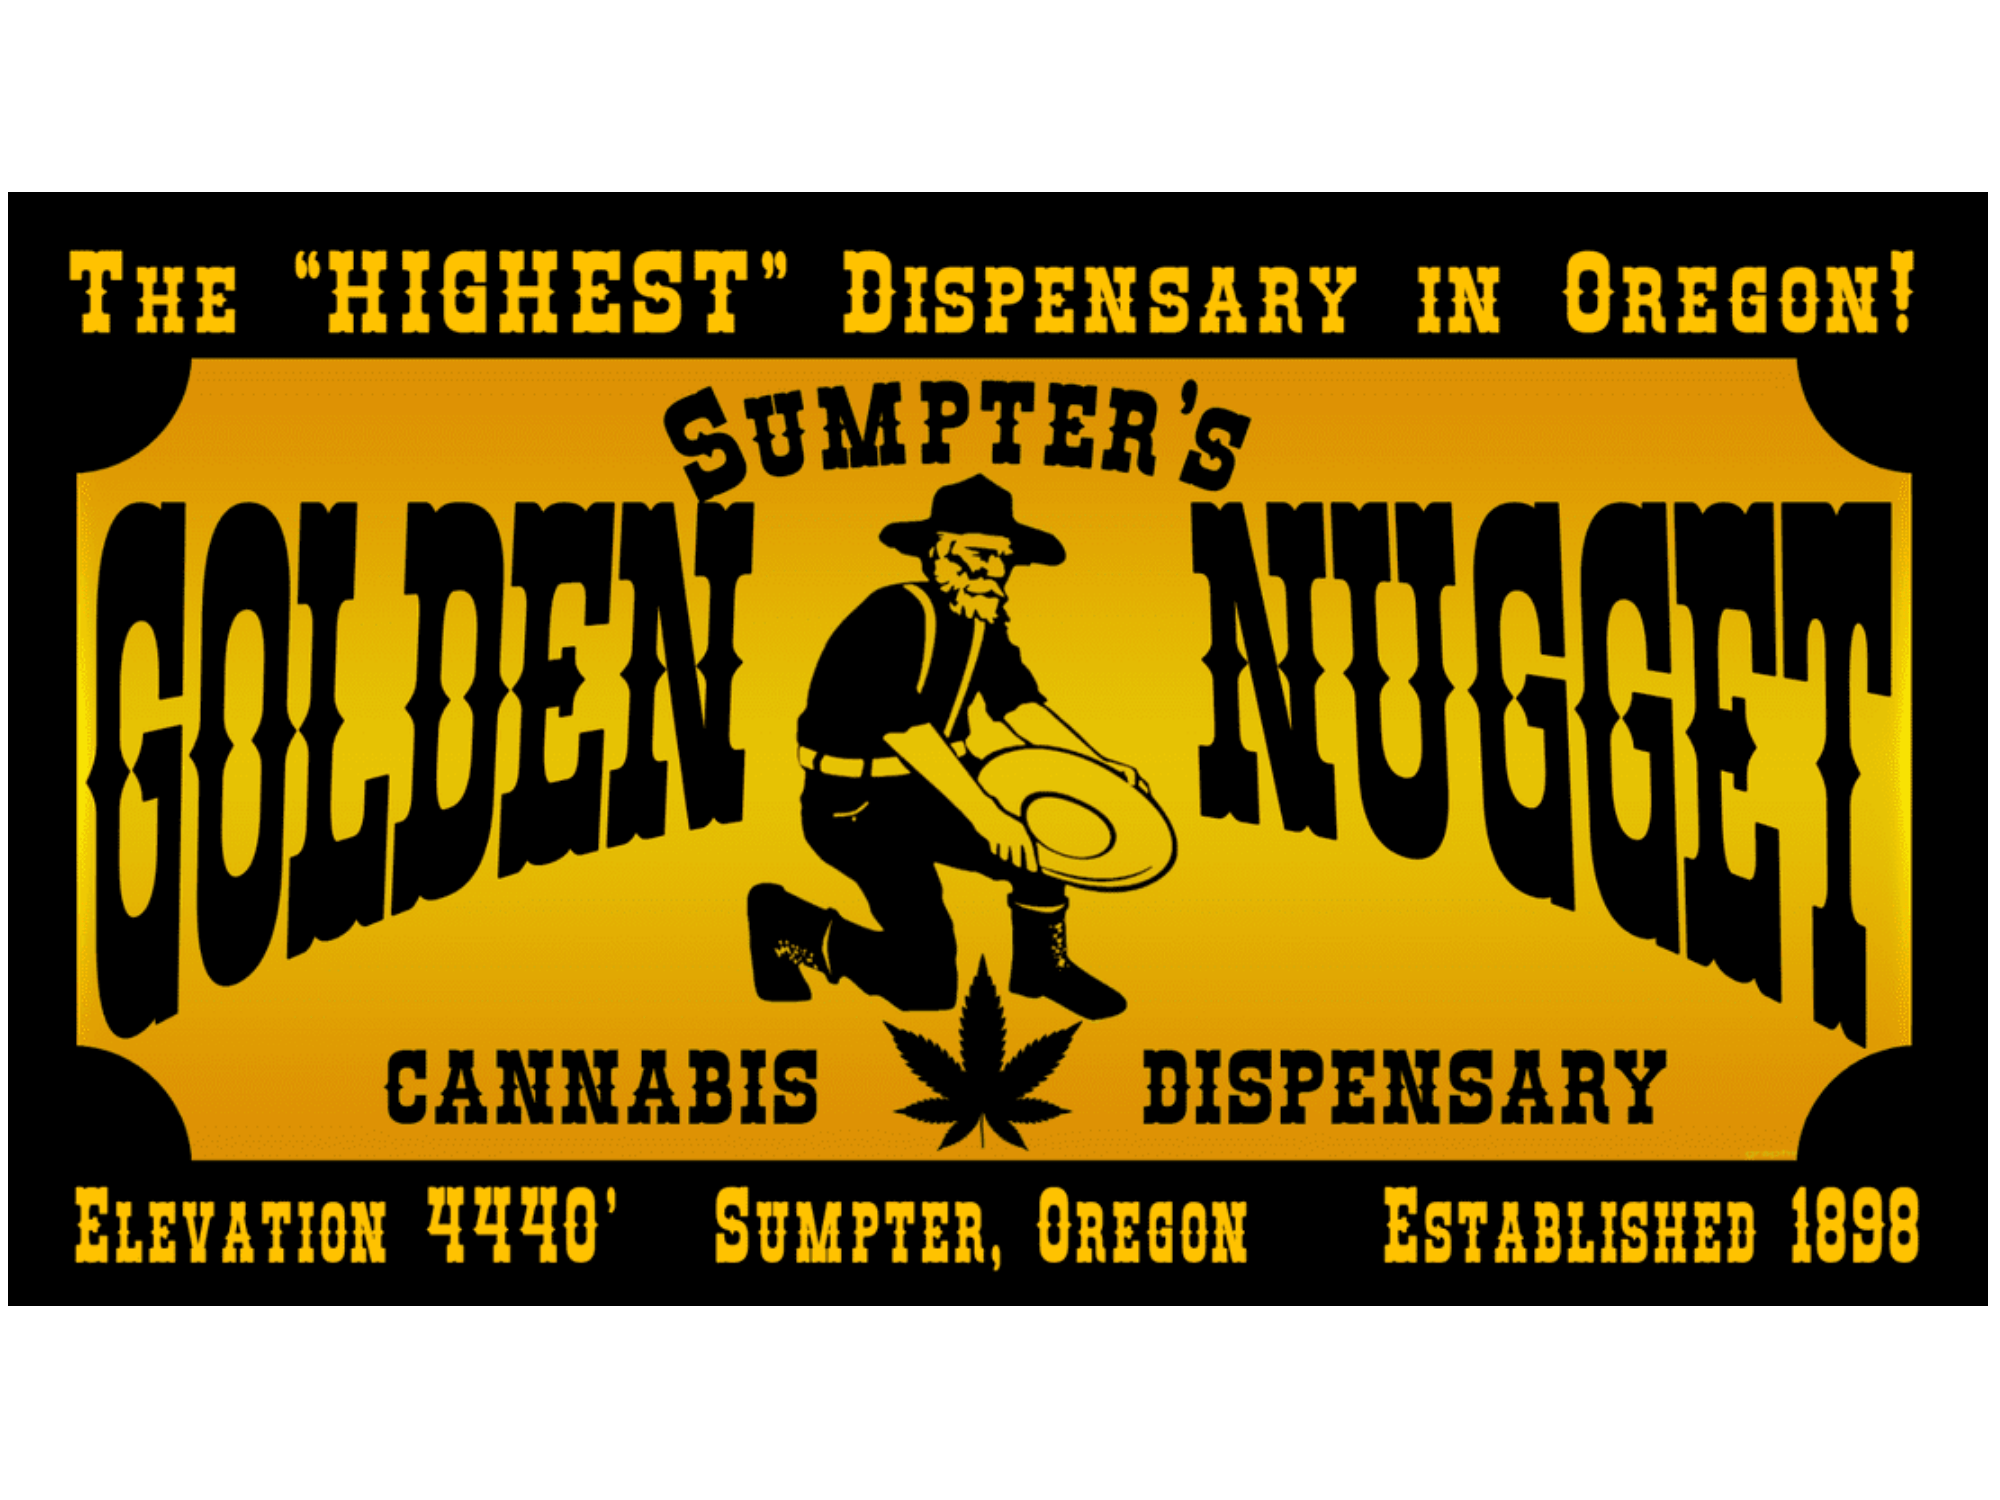 sumpter nugget dispensary